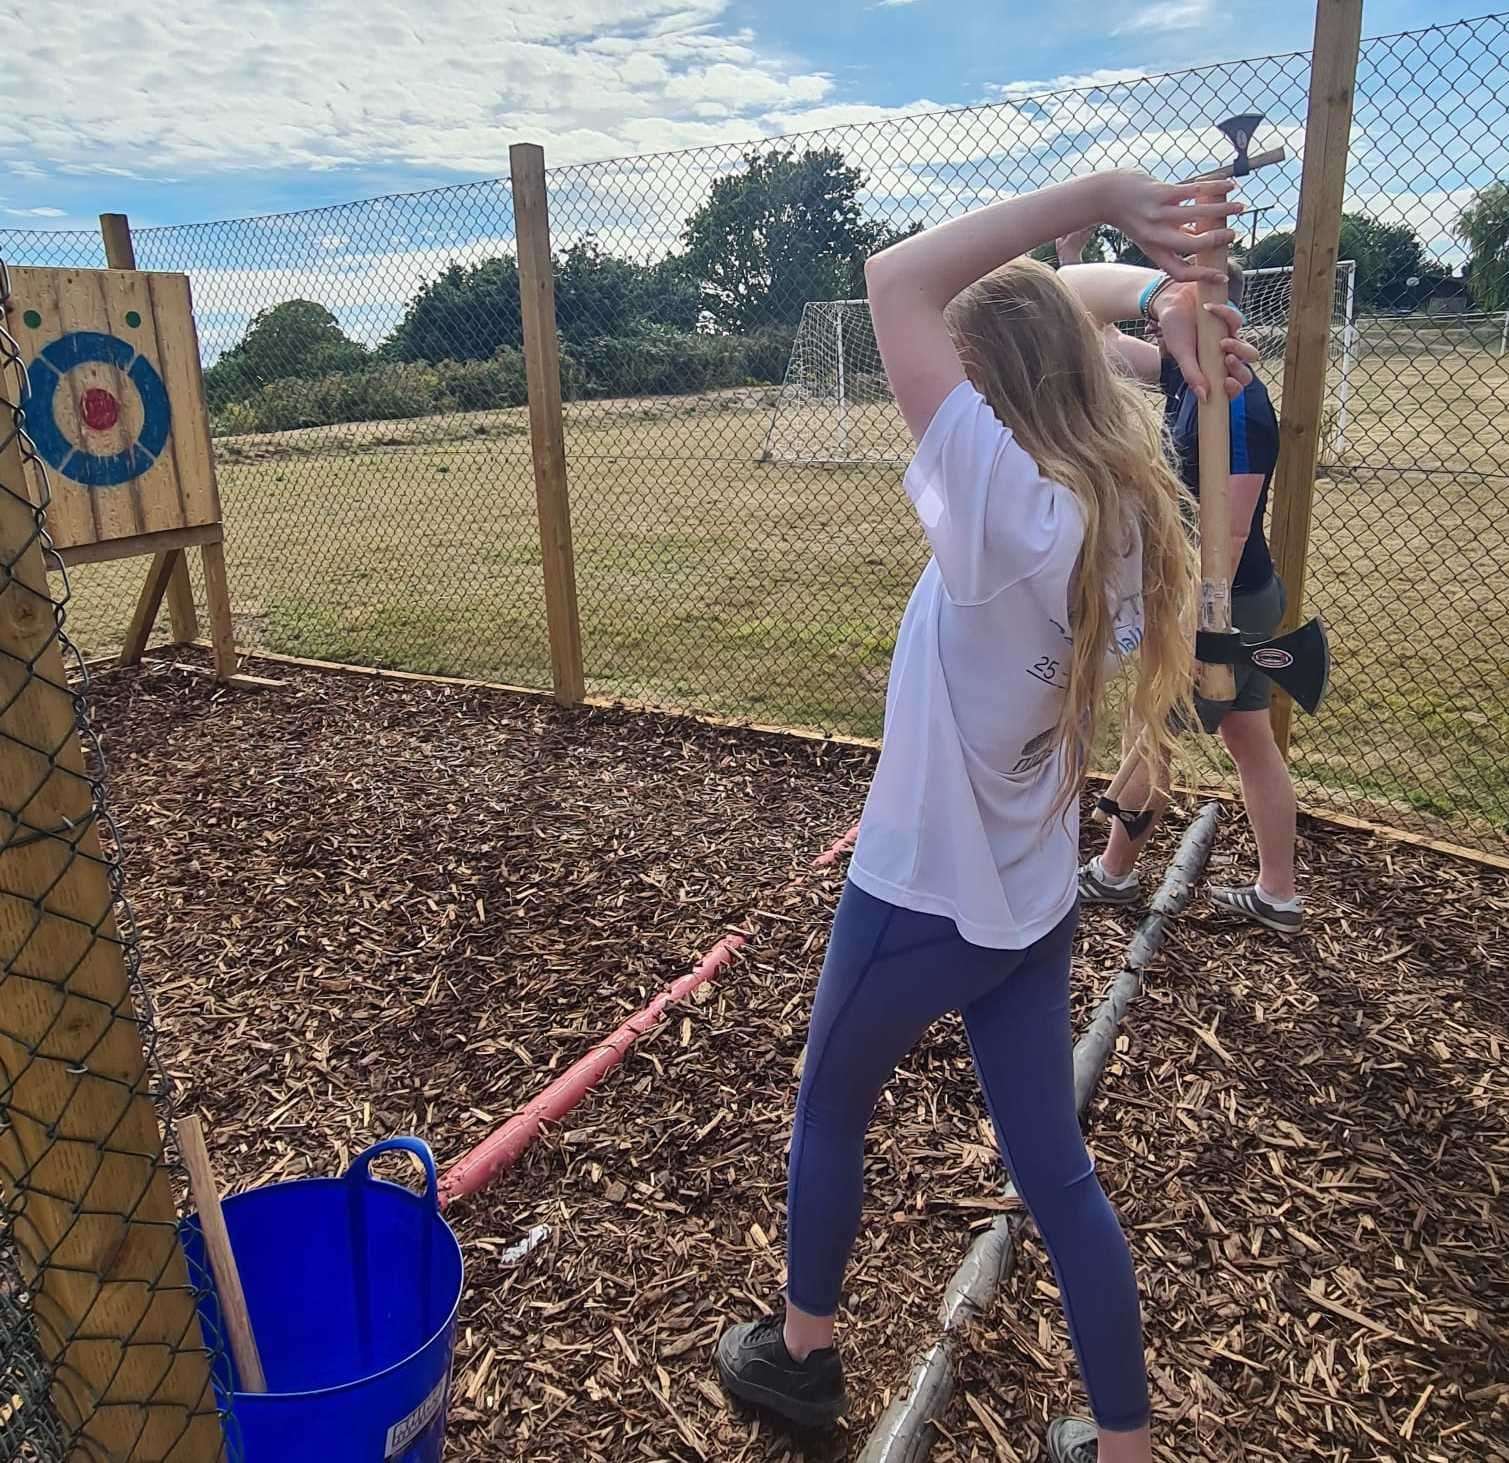 My daughter taking aim during axe-throwing